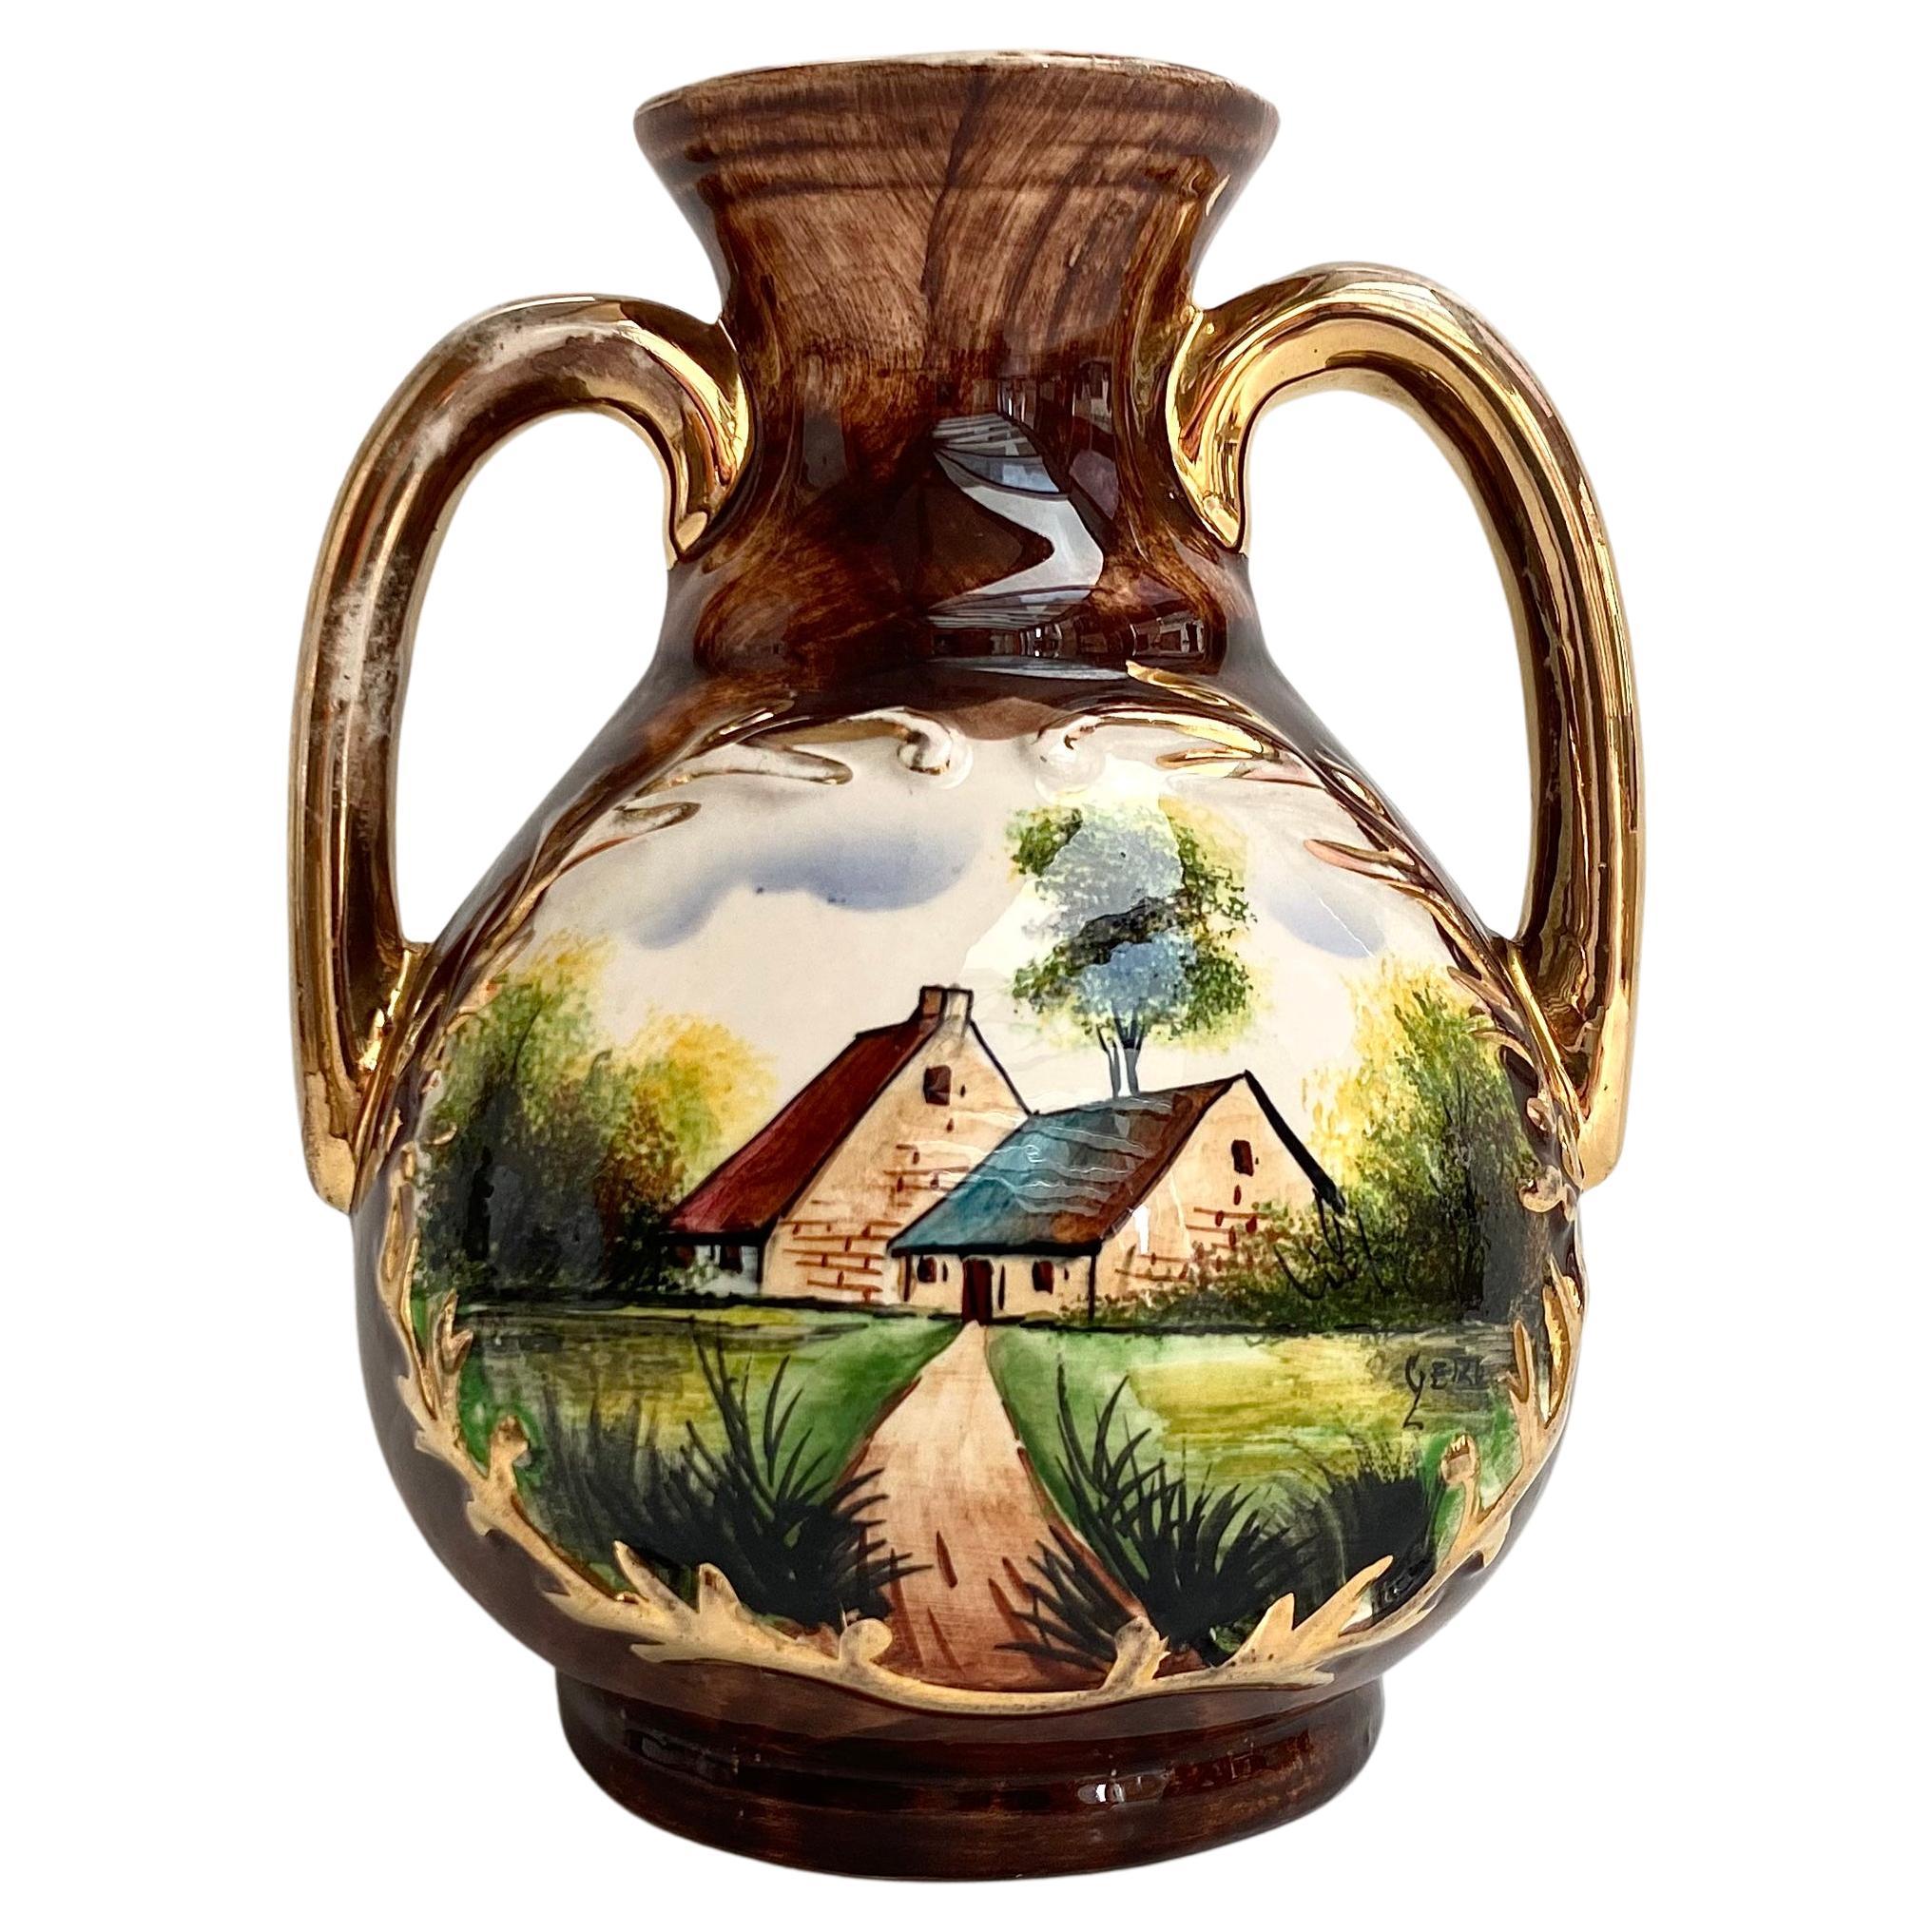 Keramikkrug-Landschaftsdekor aus Keramik, Belgien, 1950er Jahre